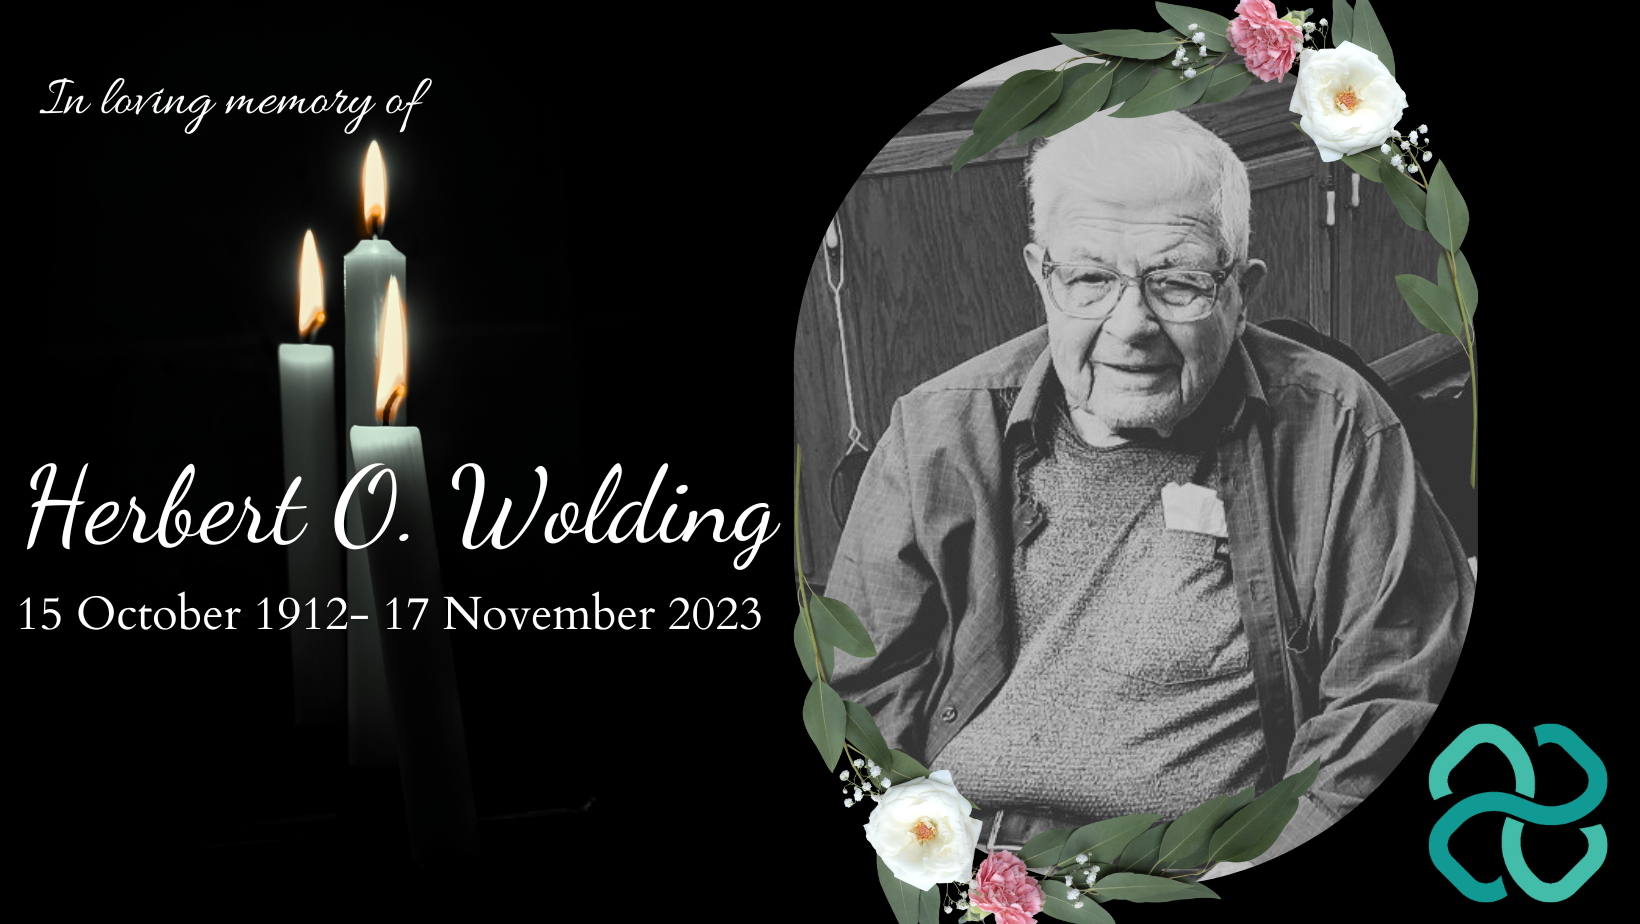 Herbert O. Wolding passed away